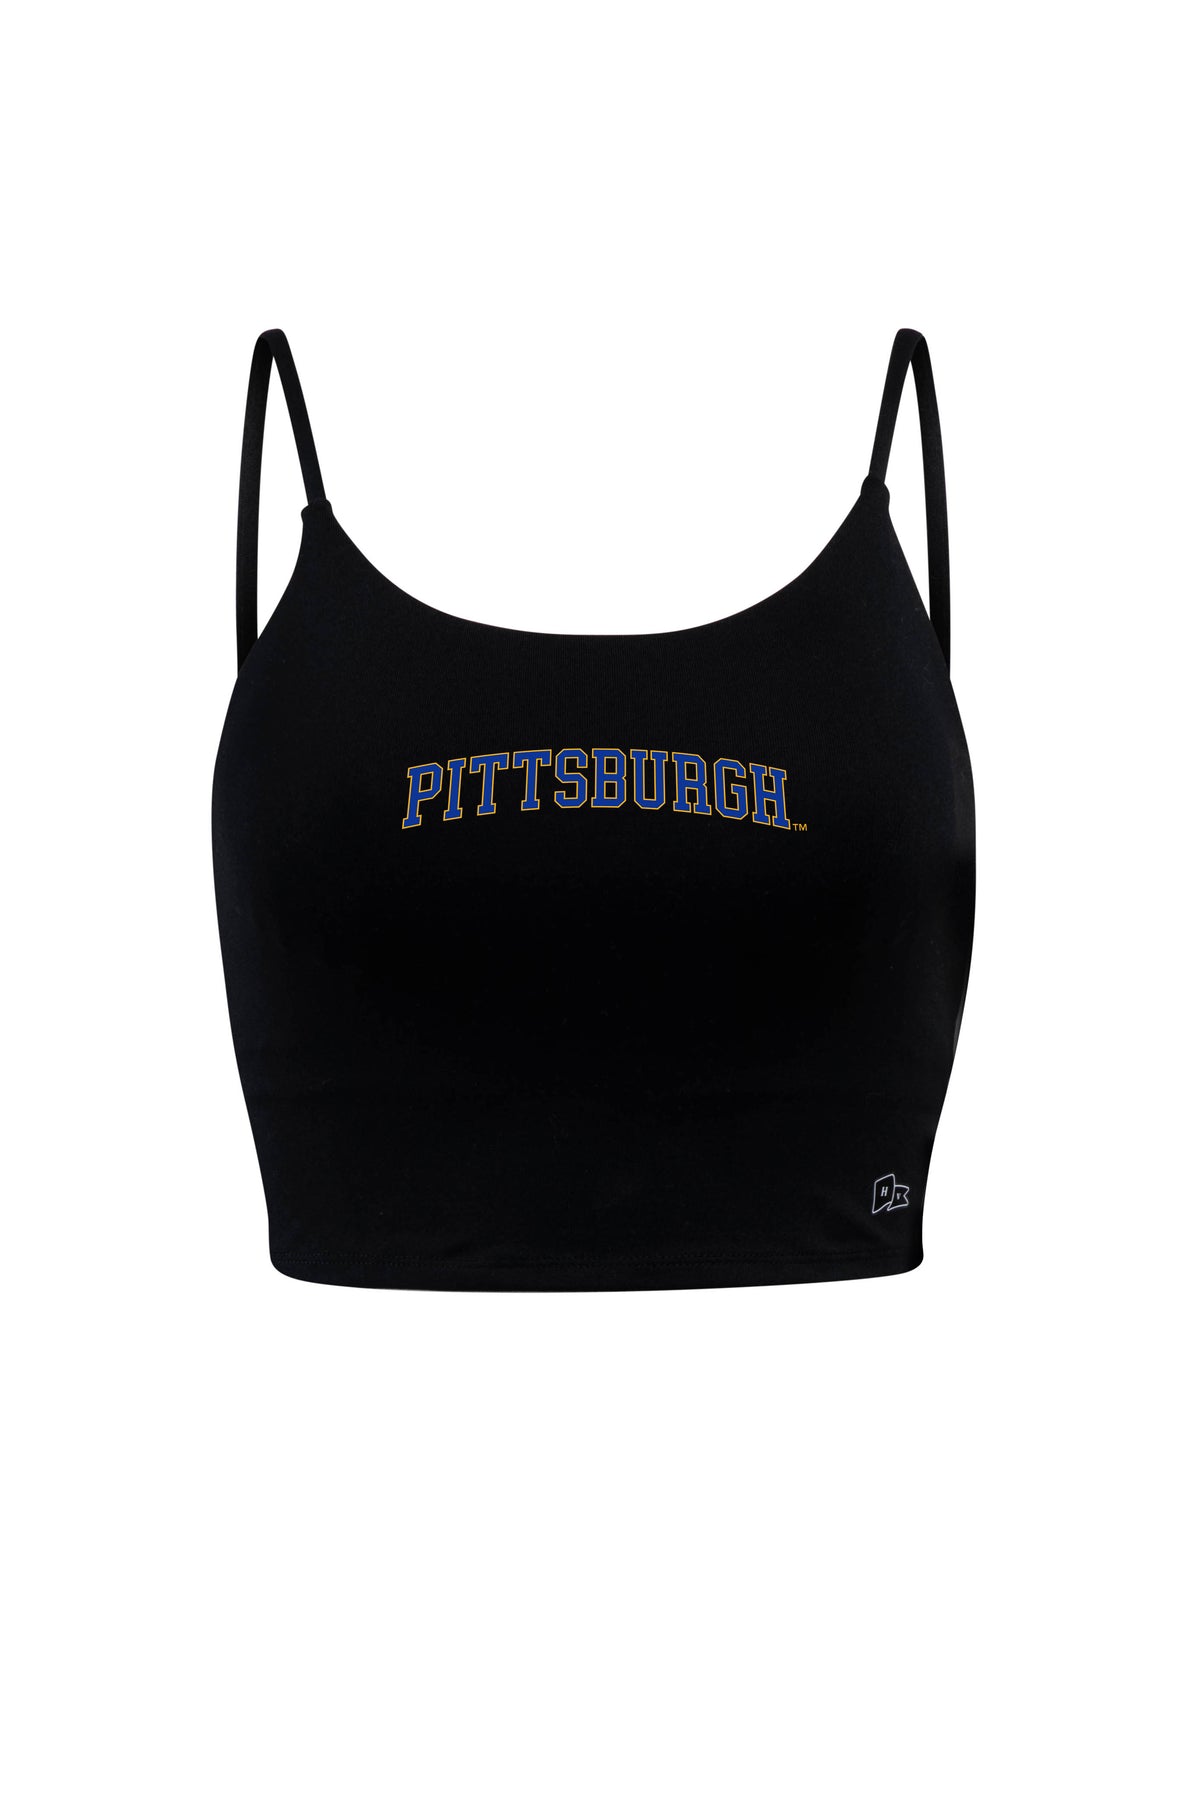 University of Pittsburgh Bra Tank Top